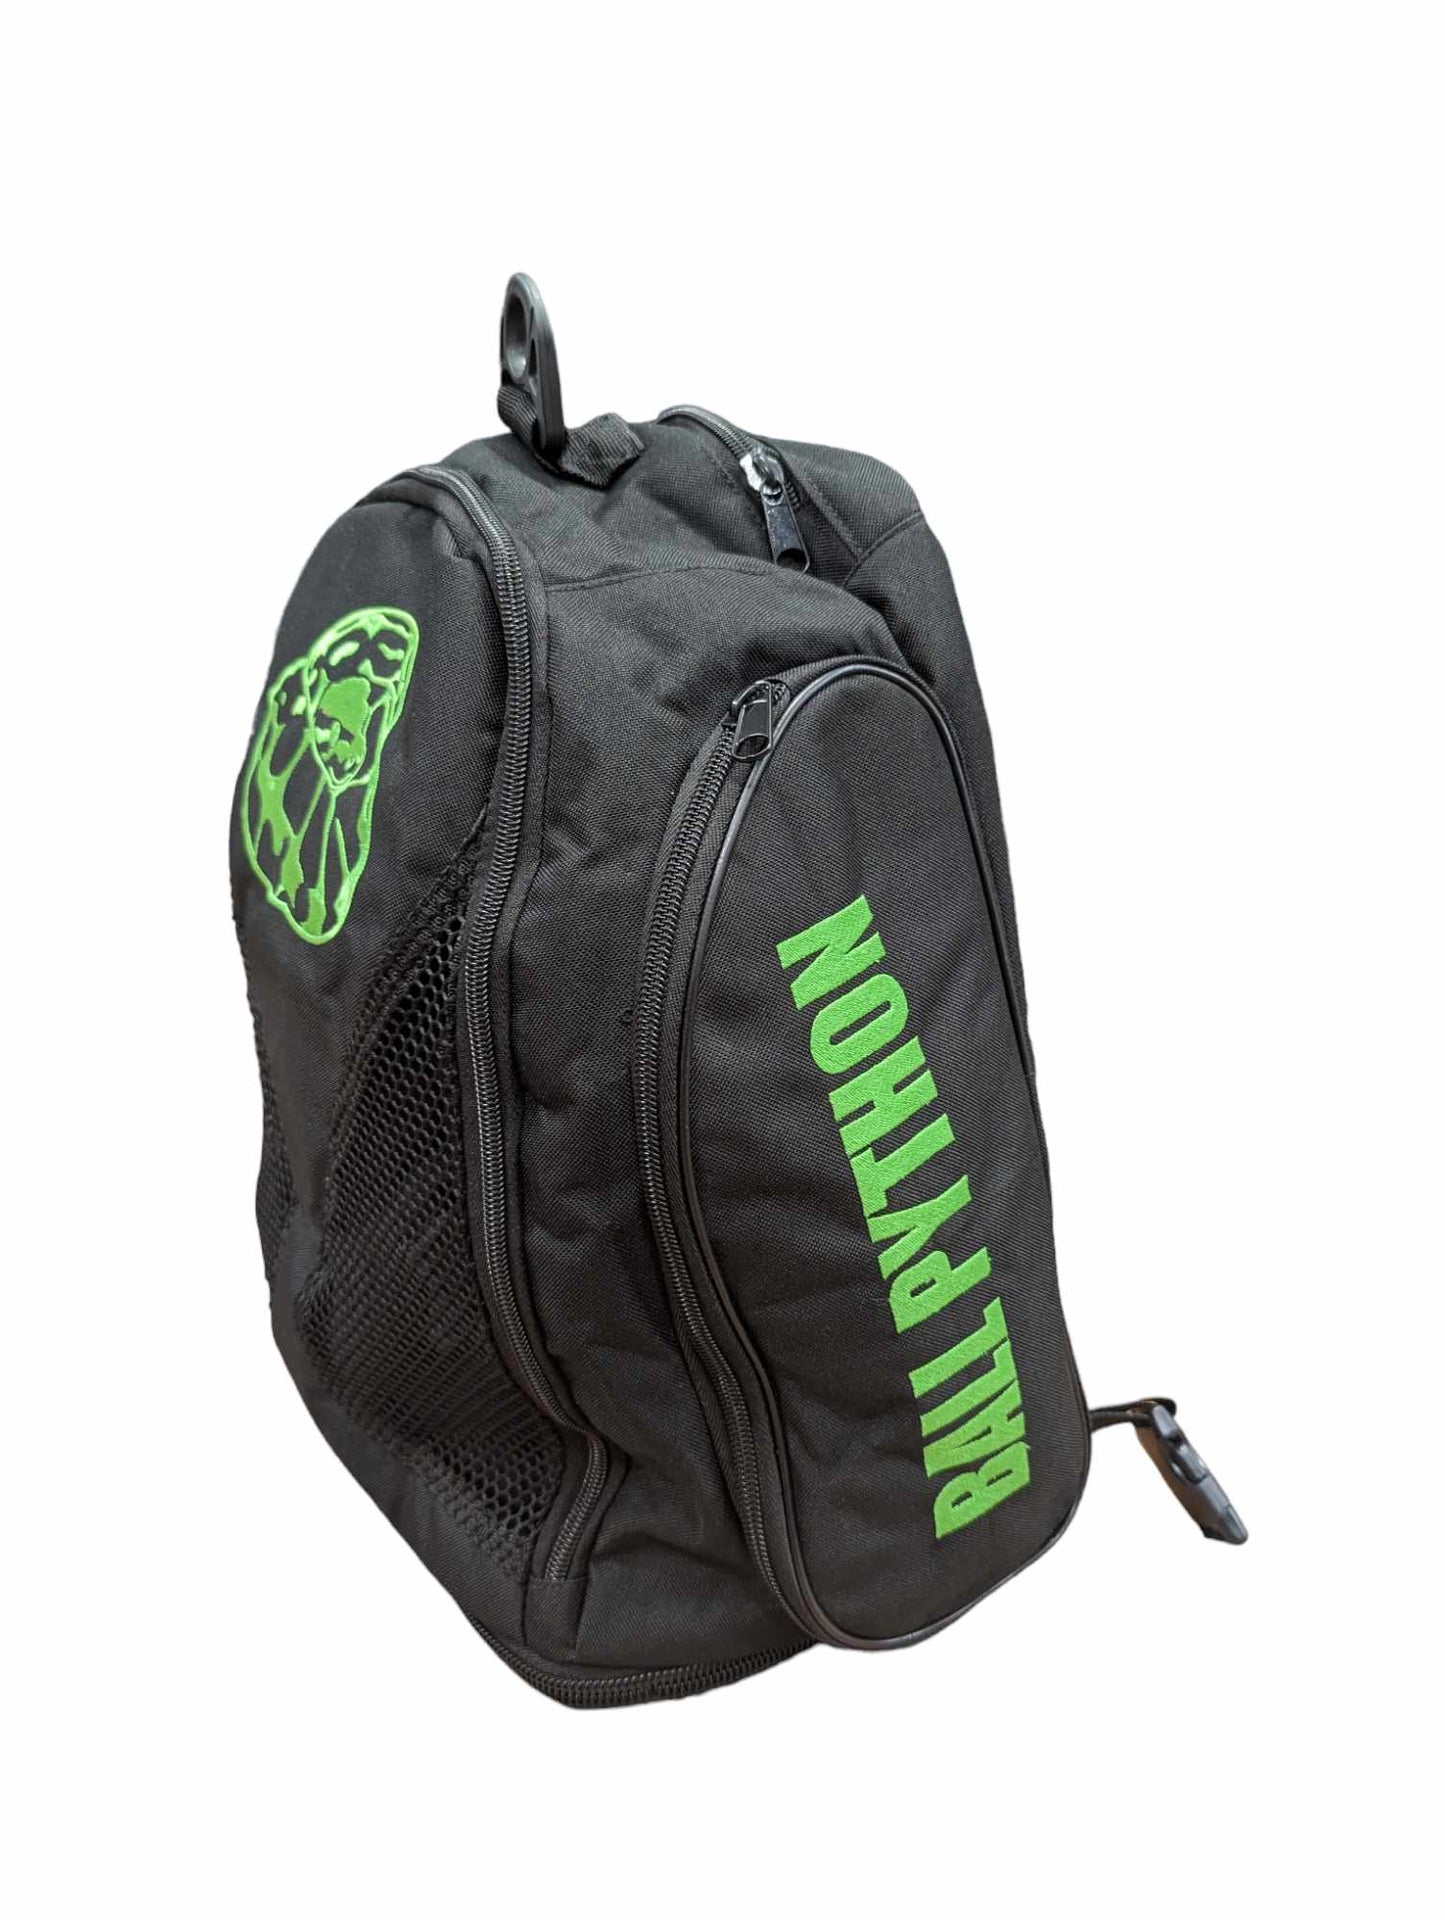 Ball Python Embroidered Backpack